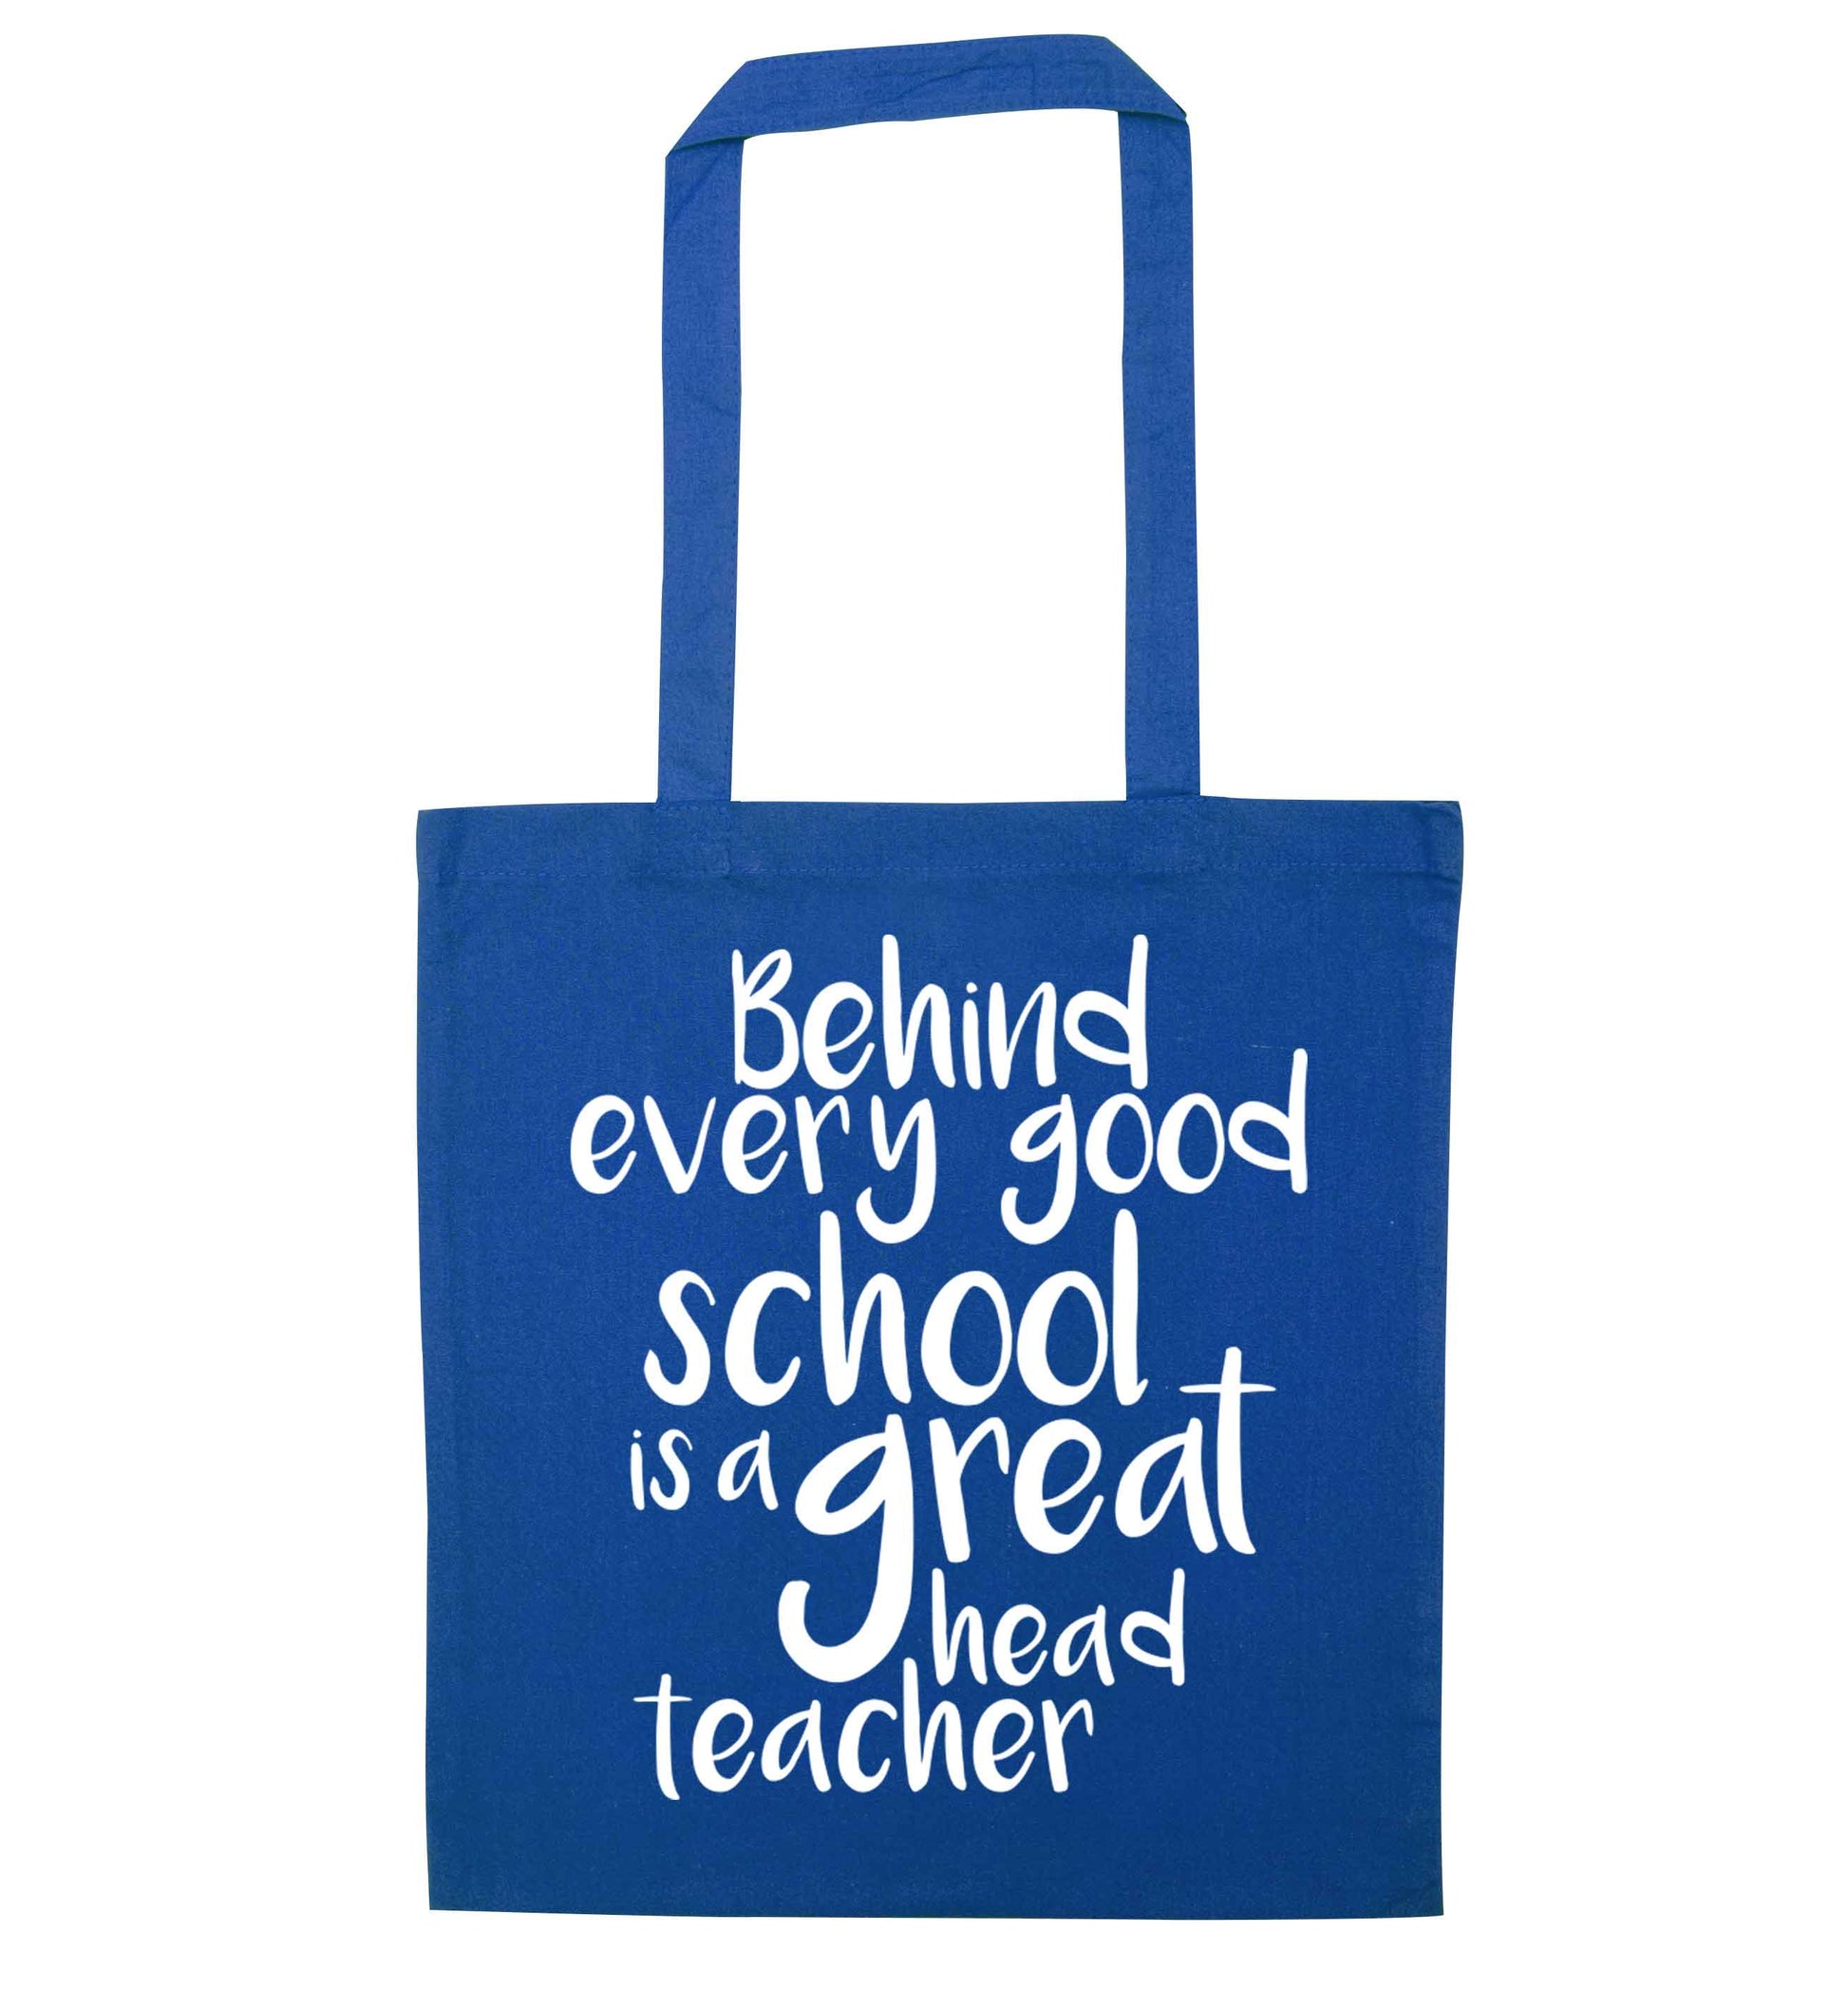 Behind every good school is a great head teacher blue tote bag